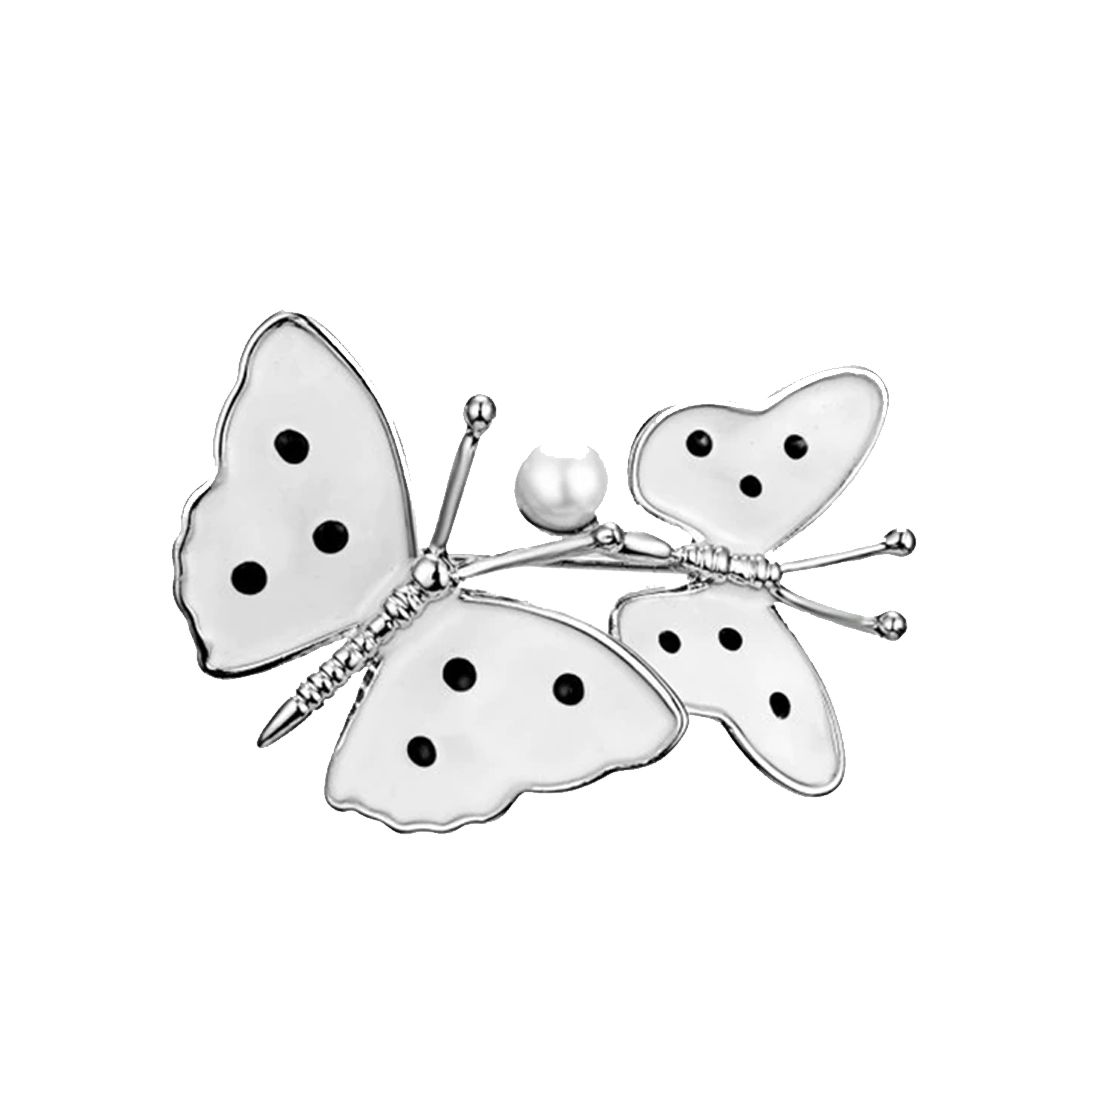 Broche papillons blancs - Strass et émaillée